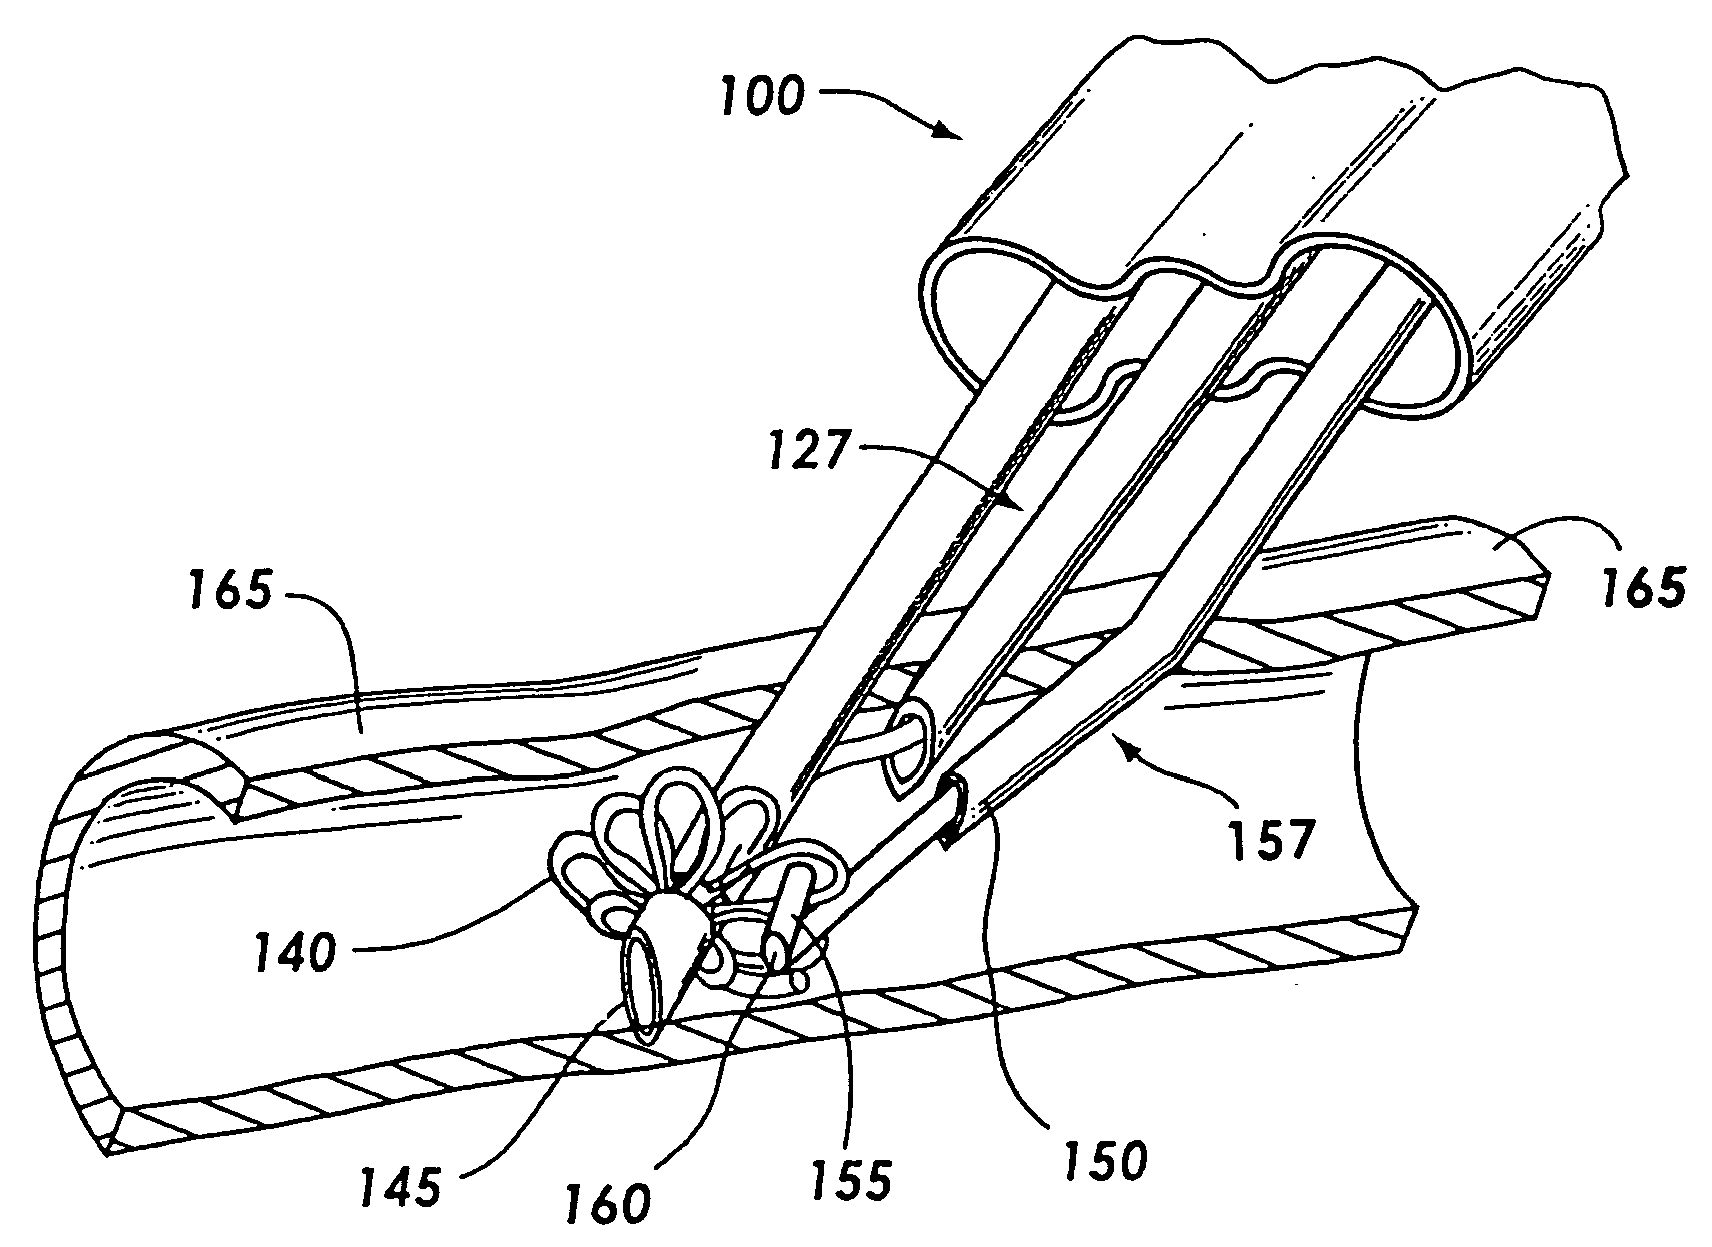 Three-needle closure device